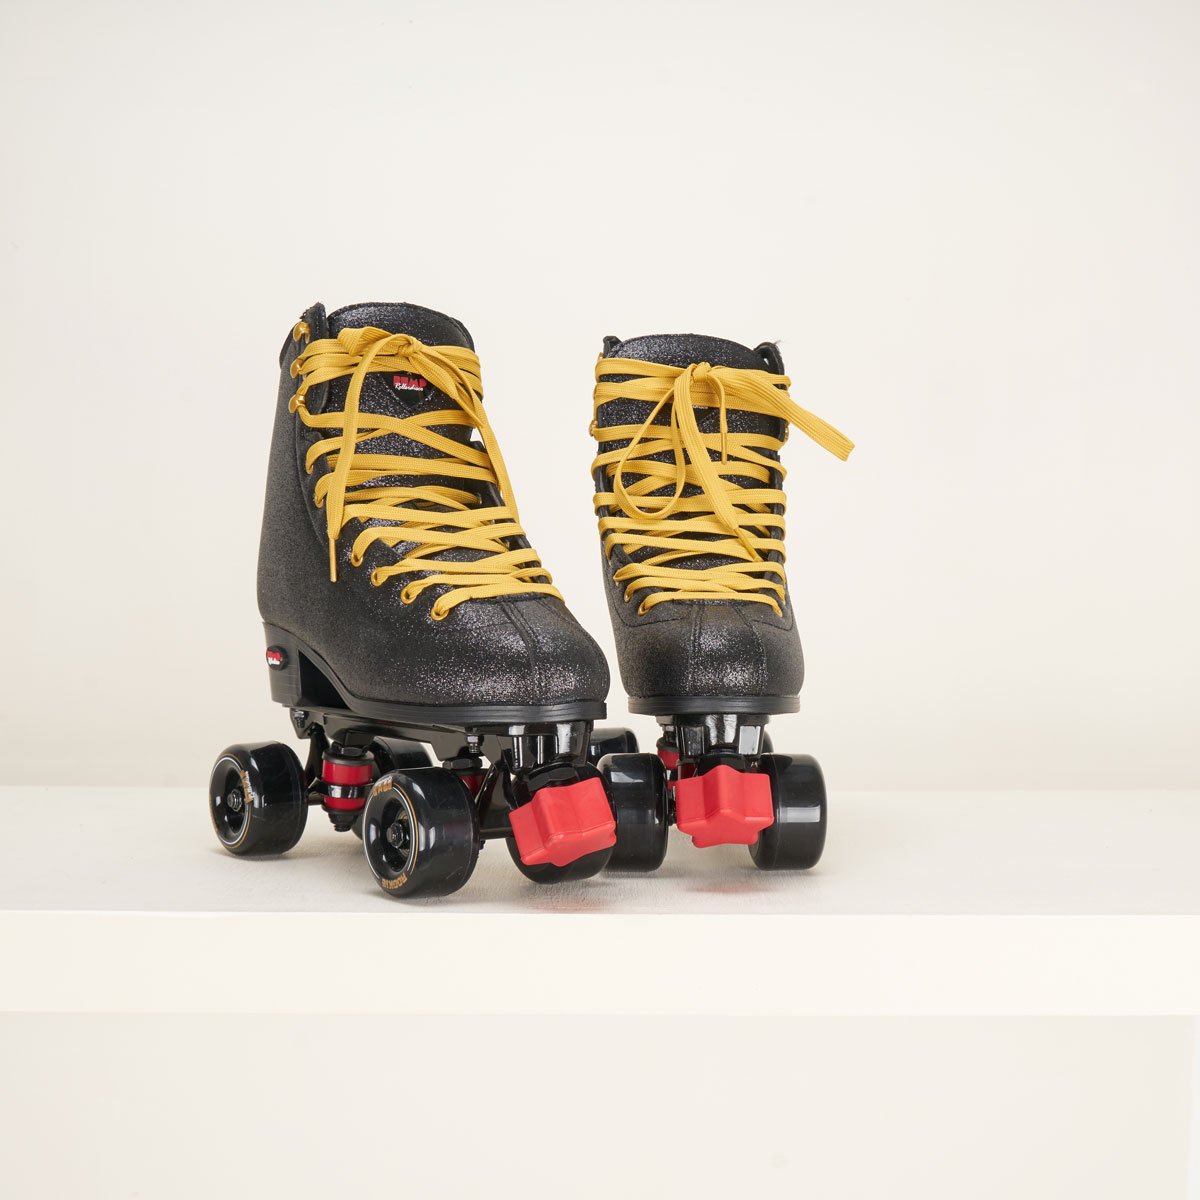 Rookie Bump Roller disco skates - Black